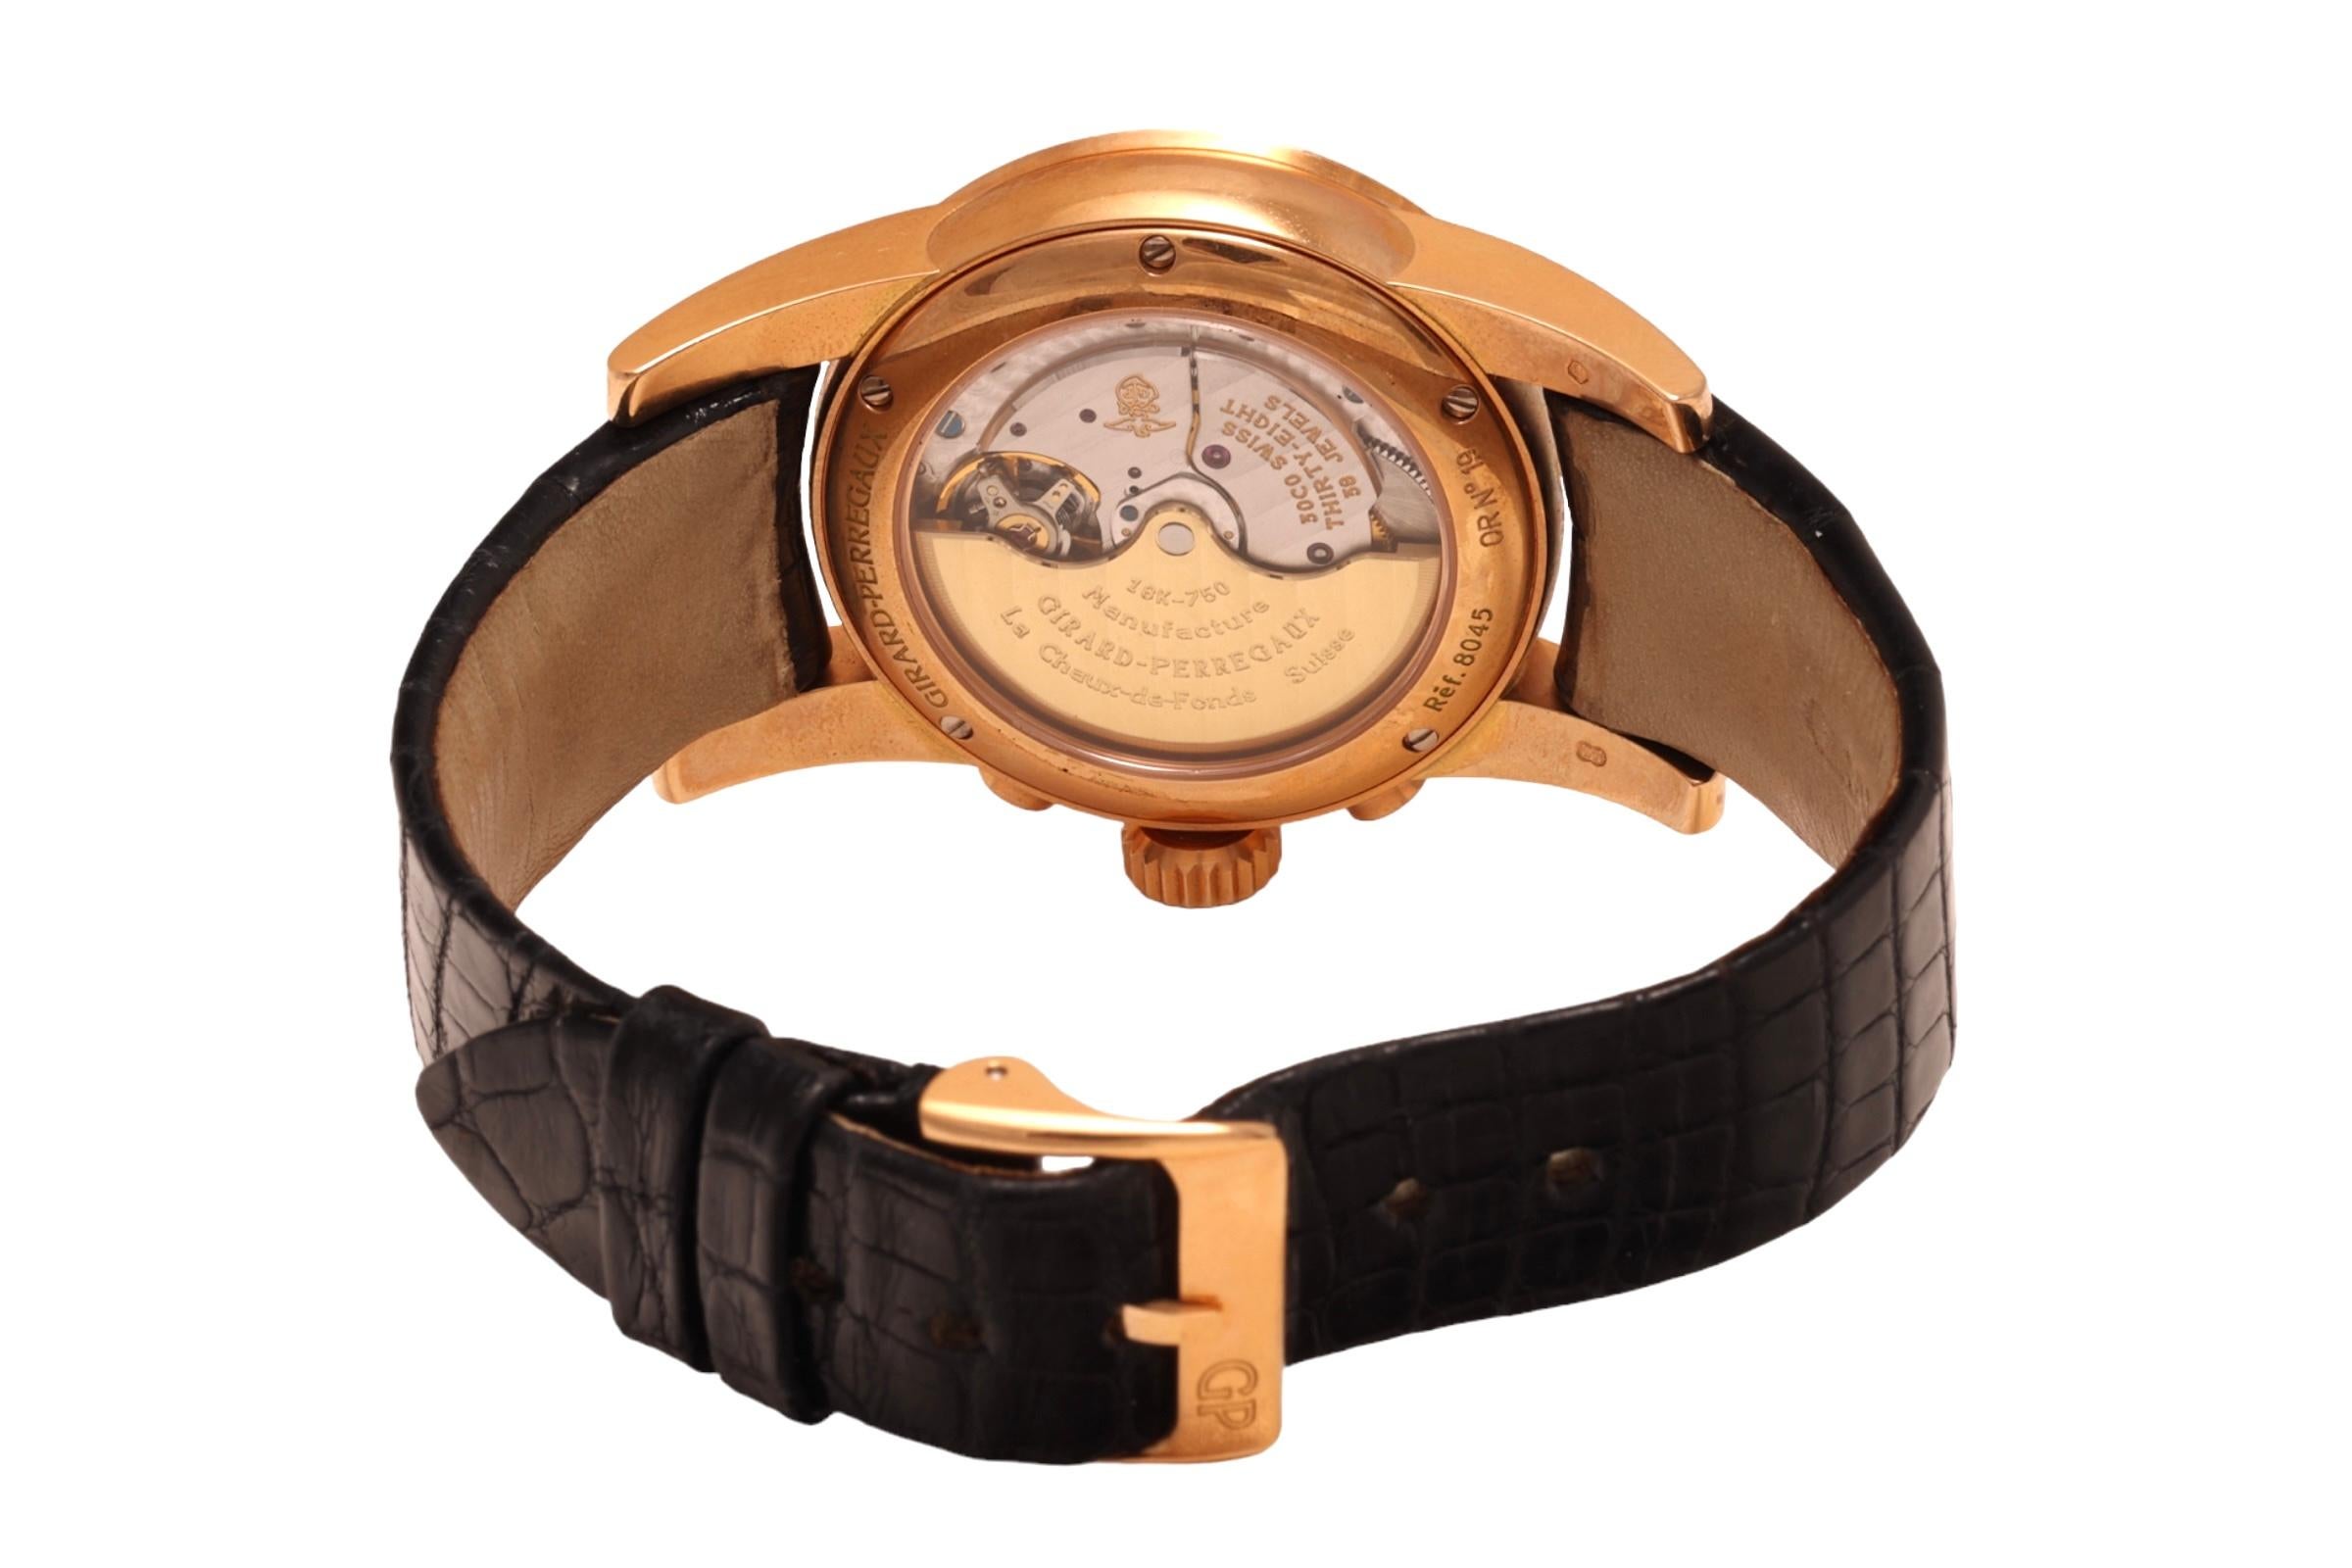 18 Kt Girard Perregaux Chronograph Wrist Watch For Sale 3